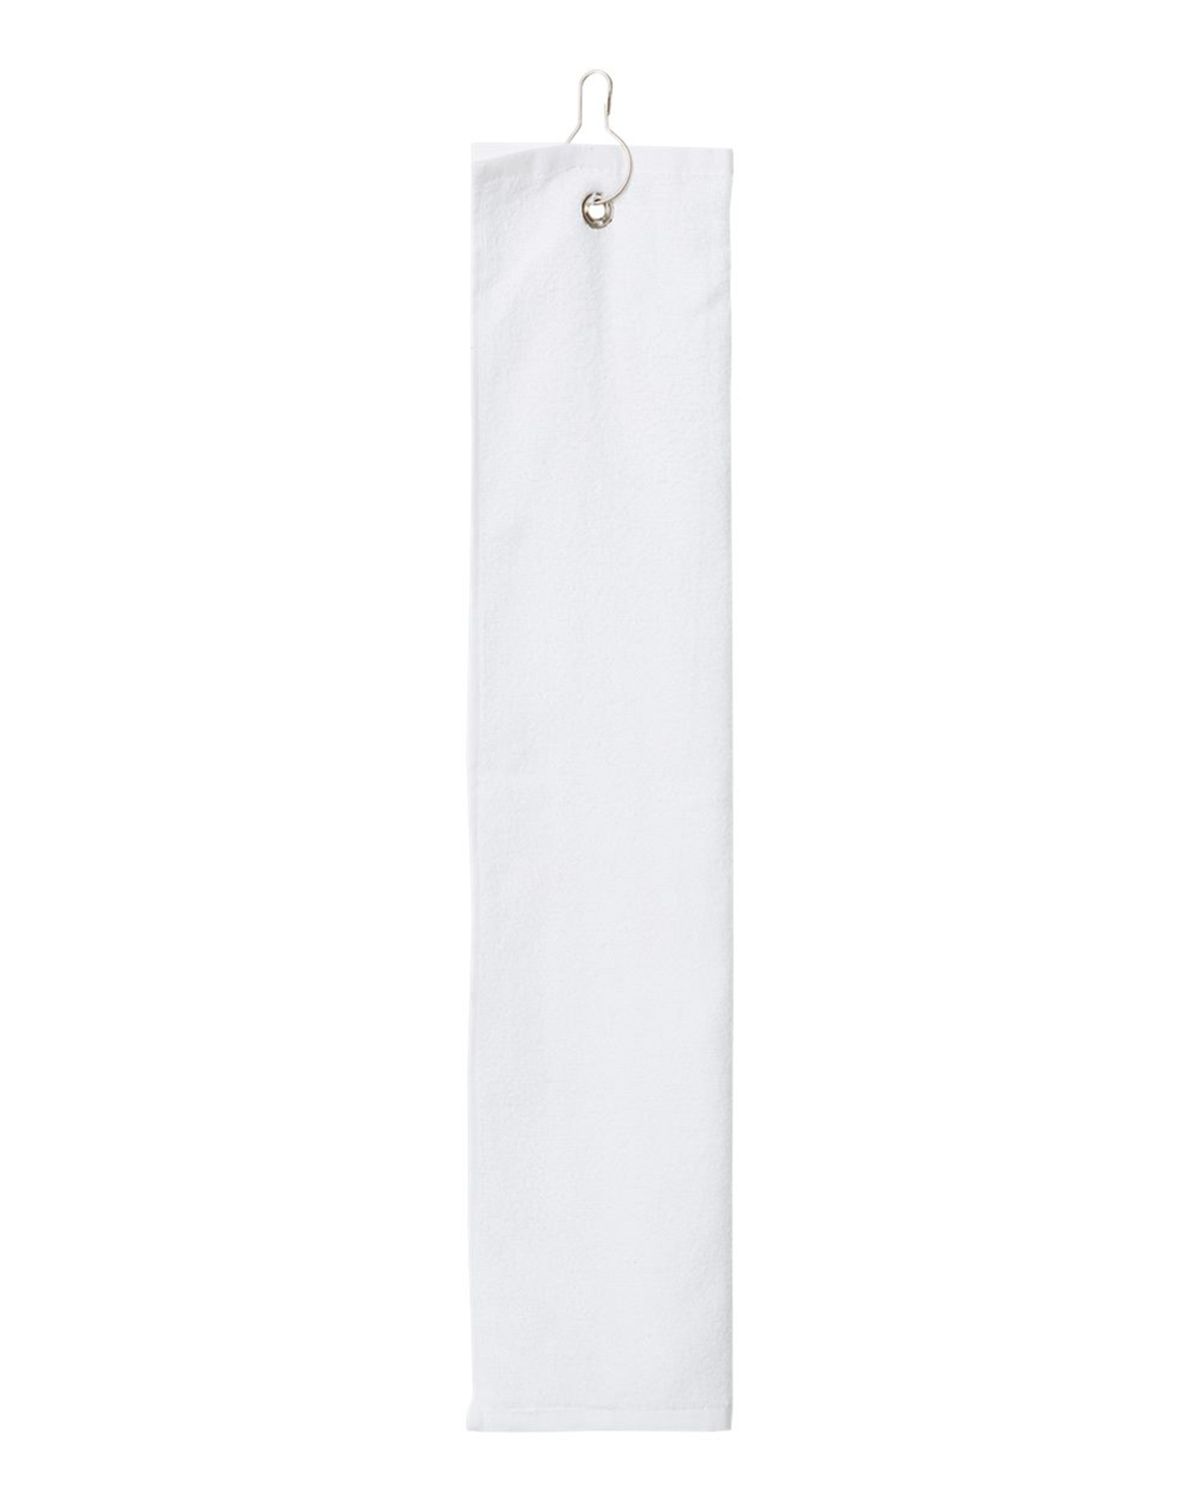 Carmel Towel Company C162523TGH Unisex Trifold Golf Towel with Grommet